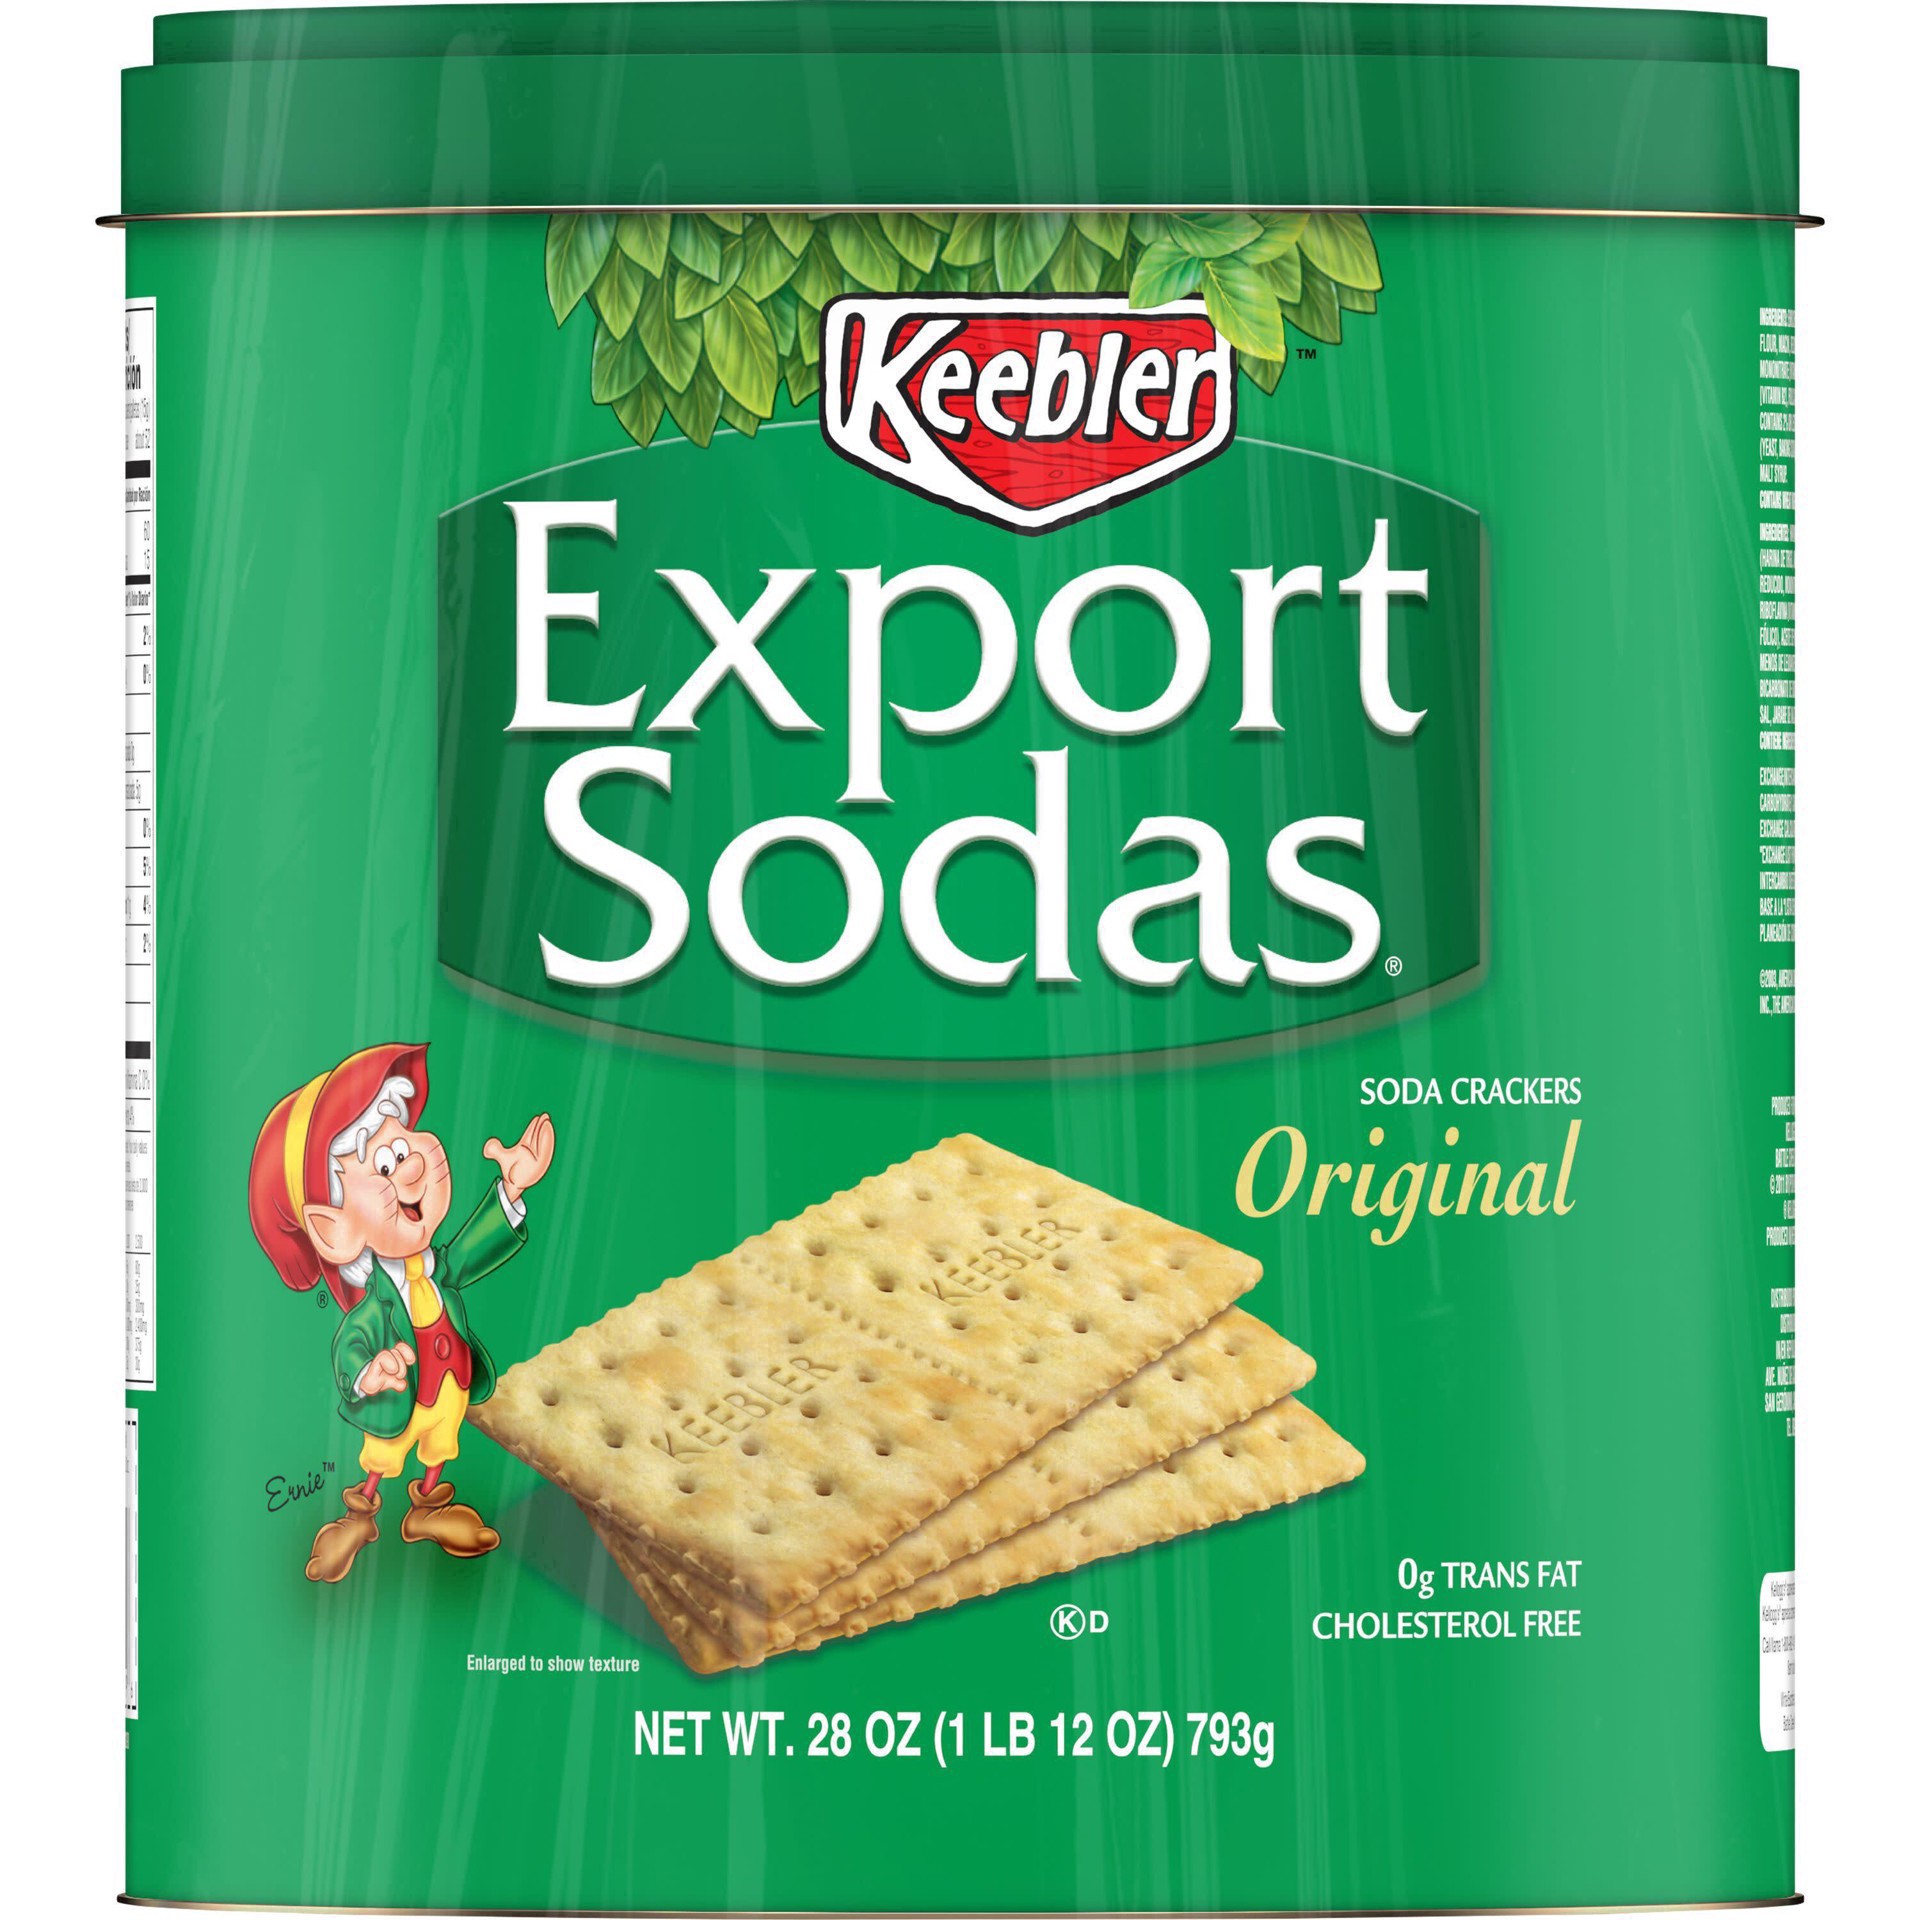 slide 7 of 63, Keebler Export Sodas Soda Crackers, Original, 28 oz, 28 oz